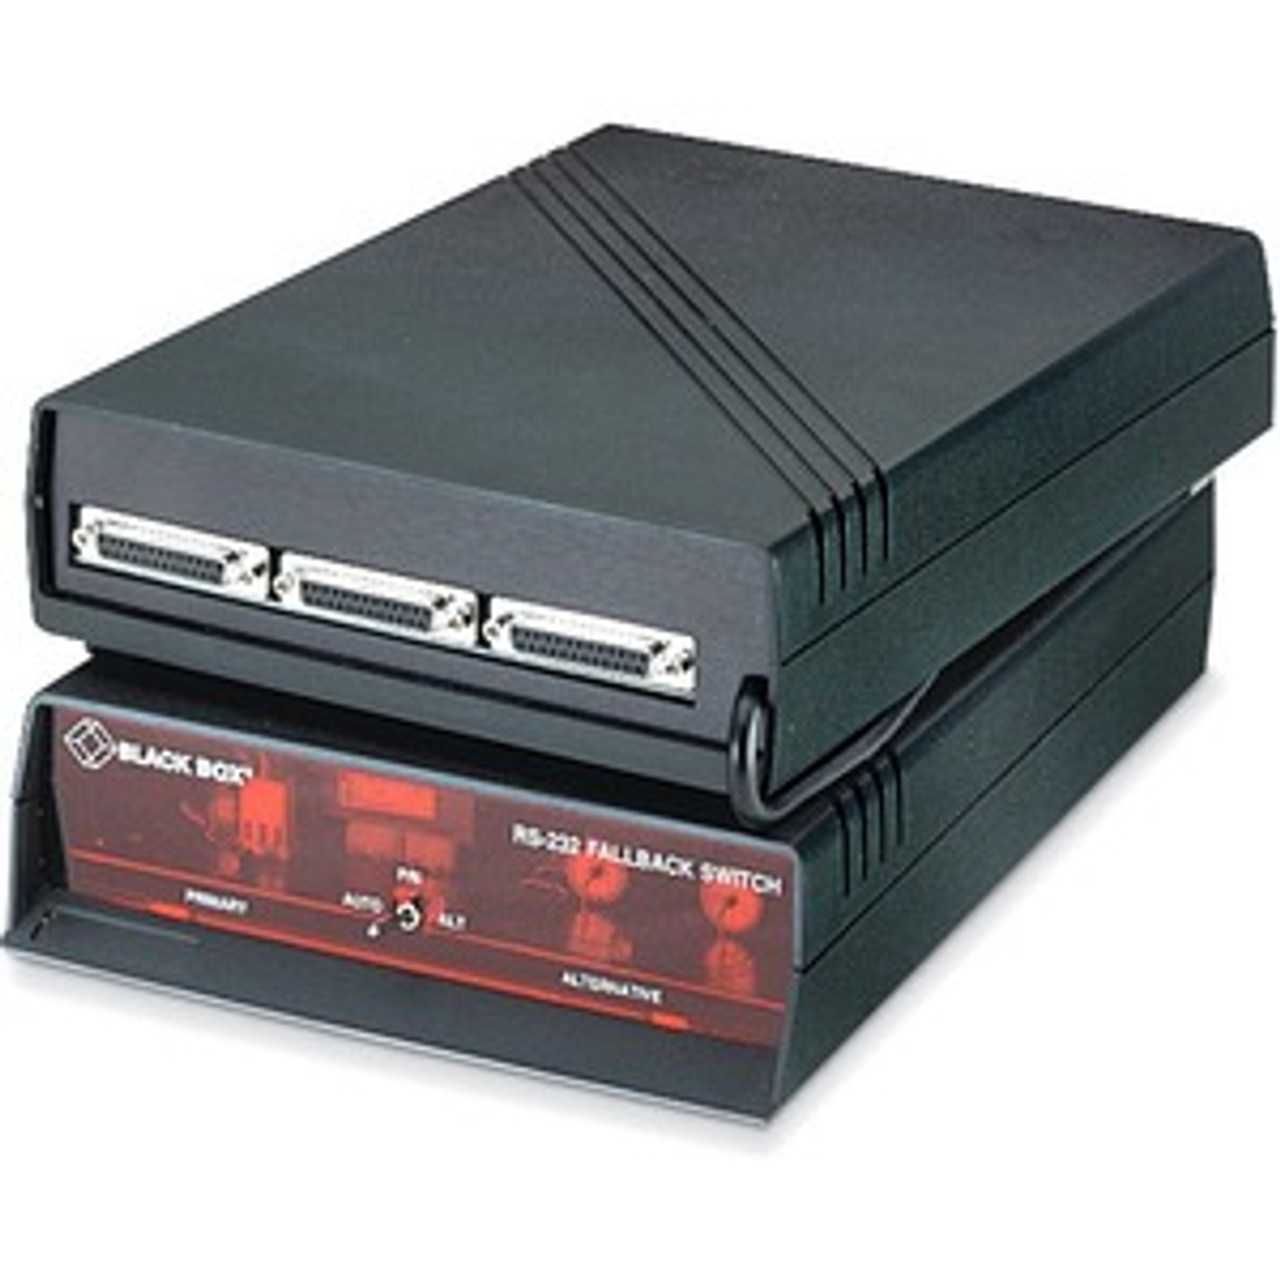 SW901A Black Box RS-232 Fallback Switch (FBS) (Refurbished)